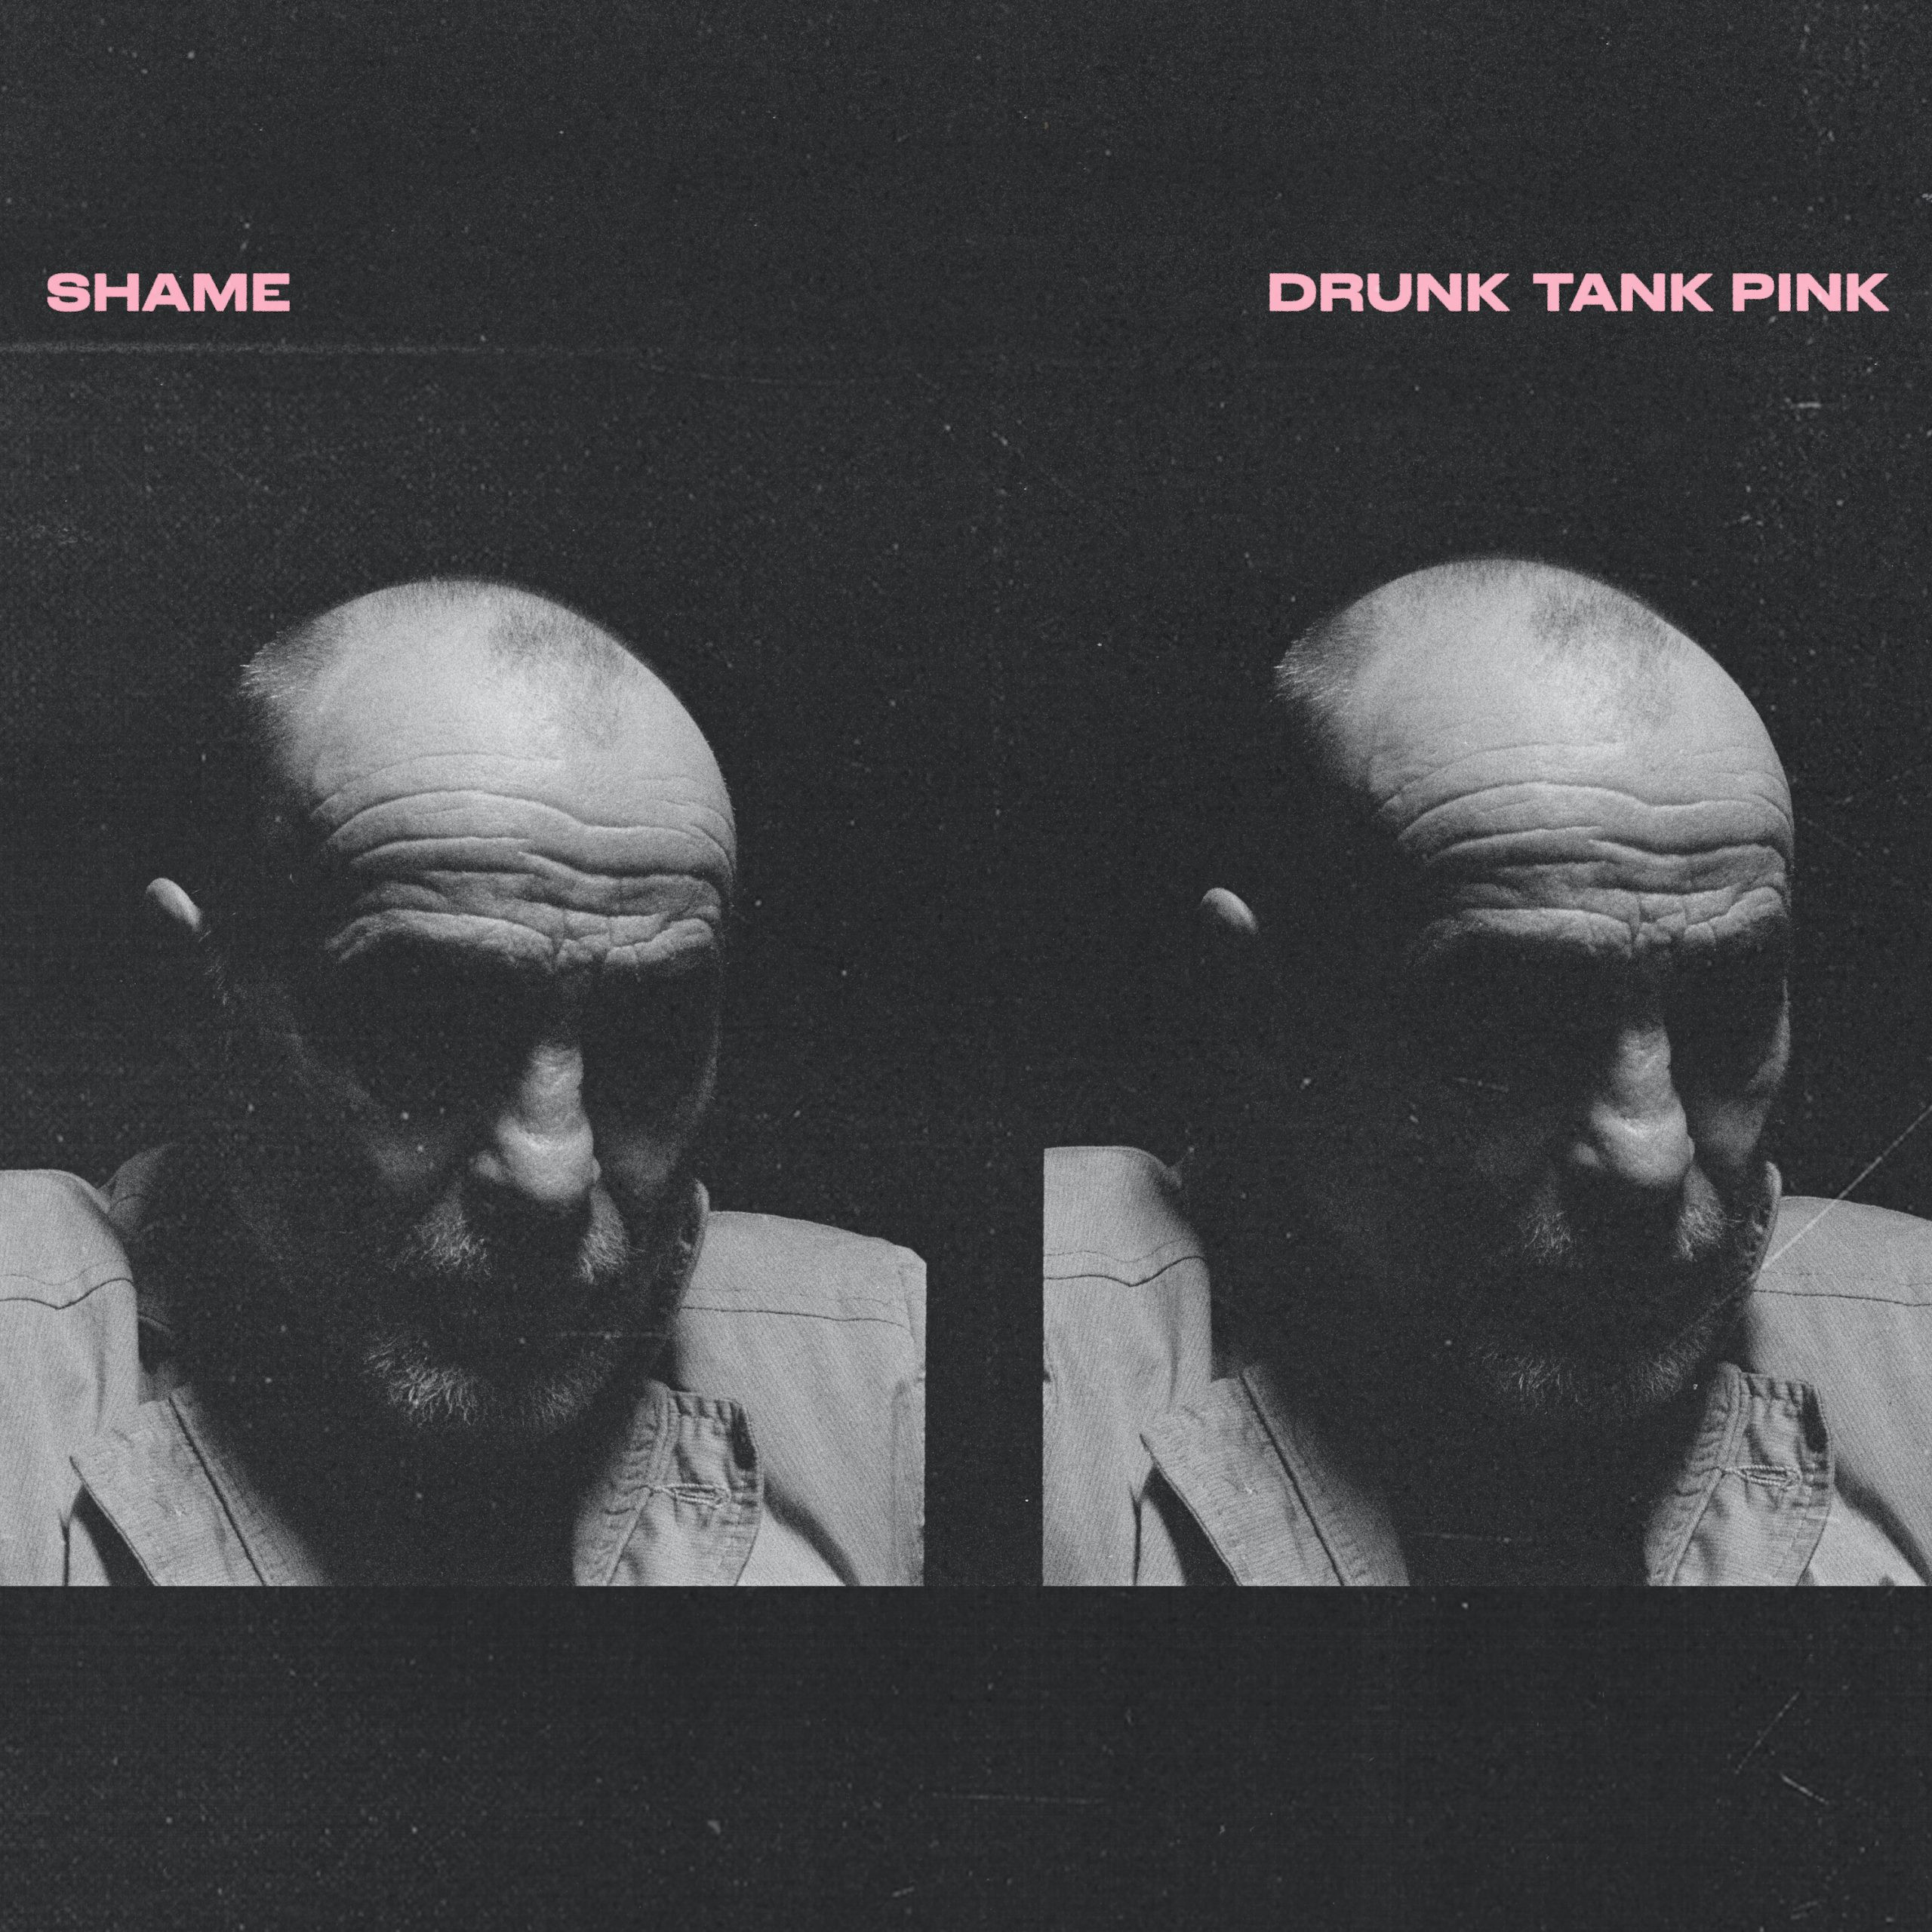 Drunk-Pink-Tank-Cover-Artwork-scaled.jpg